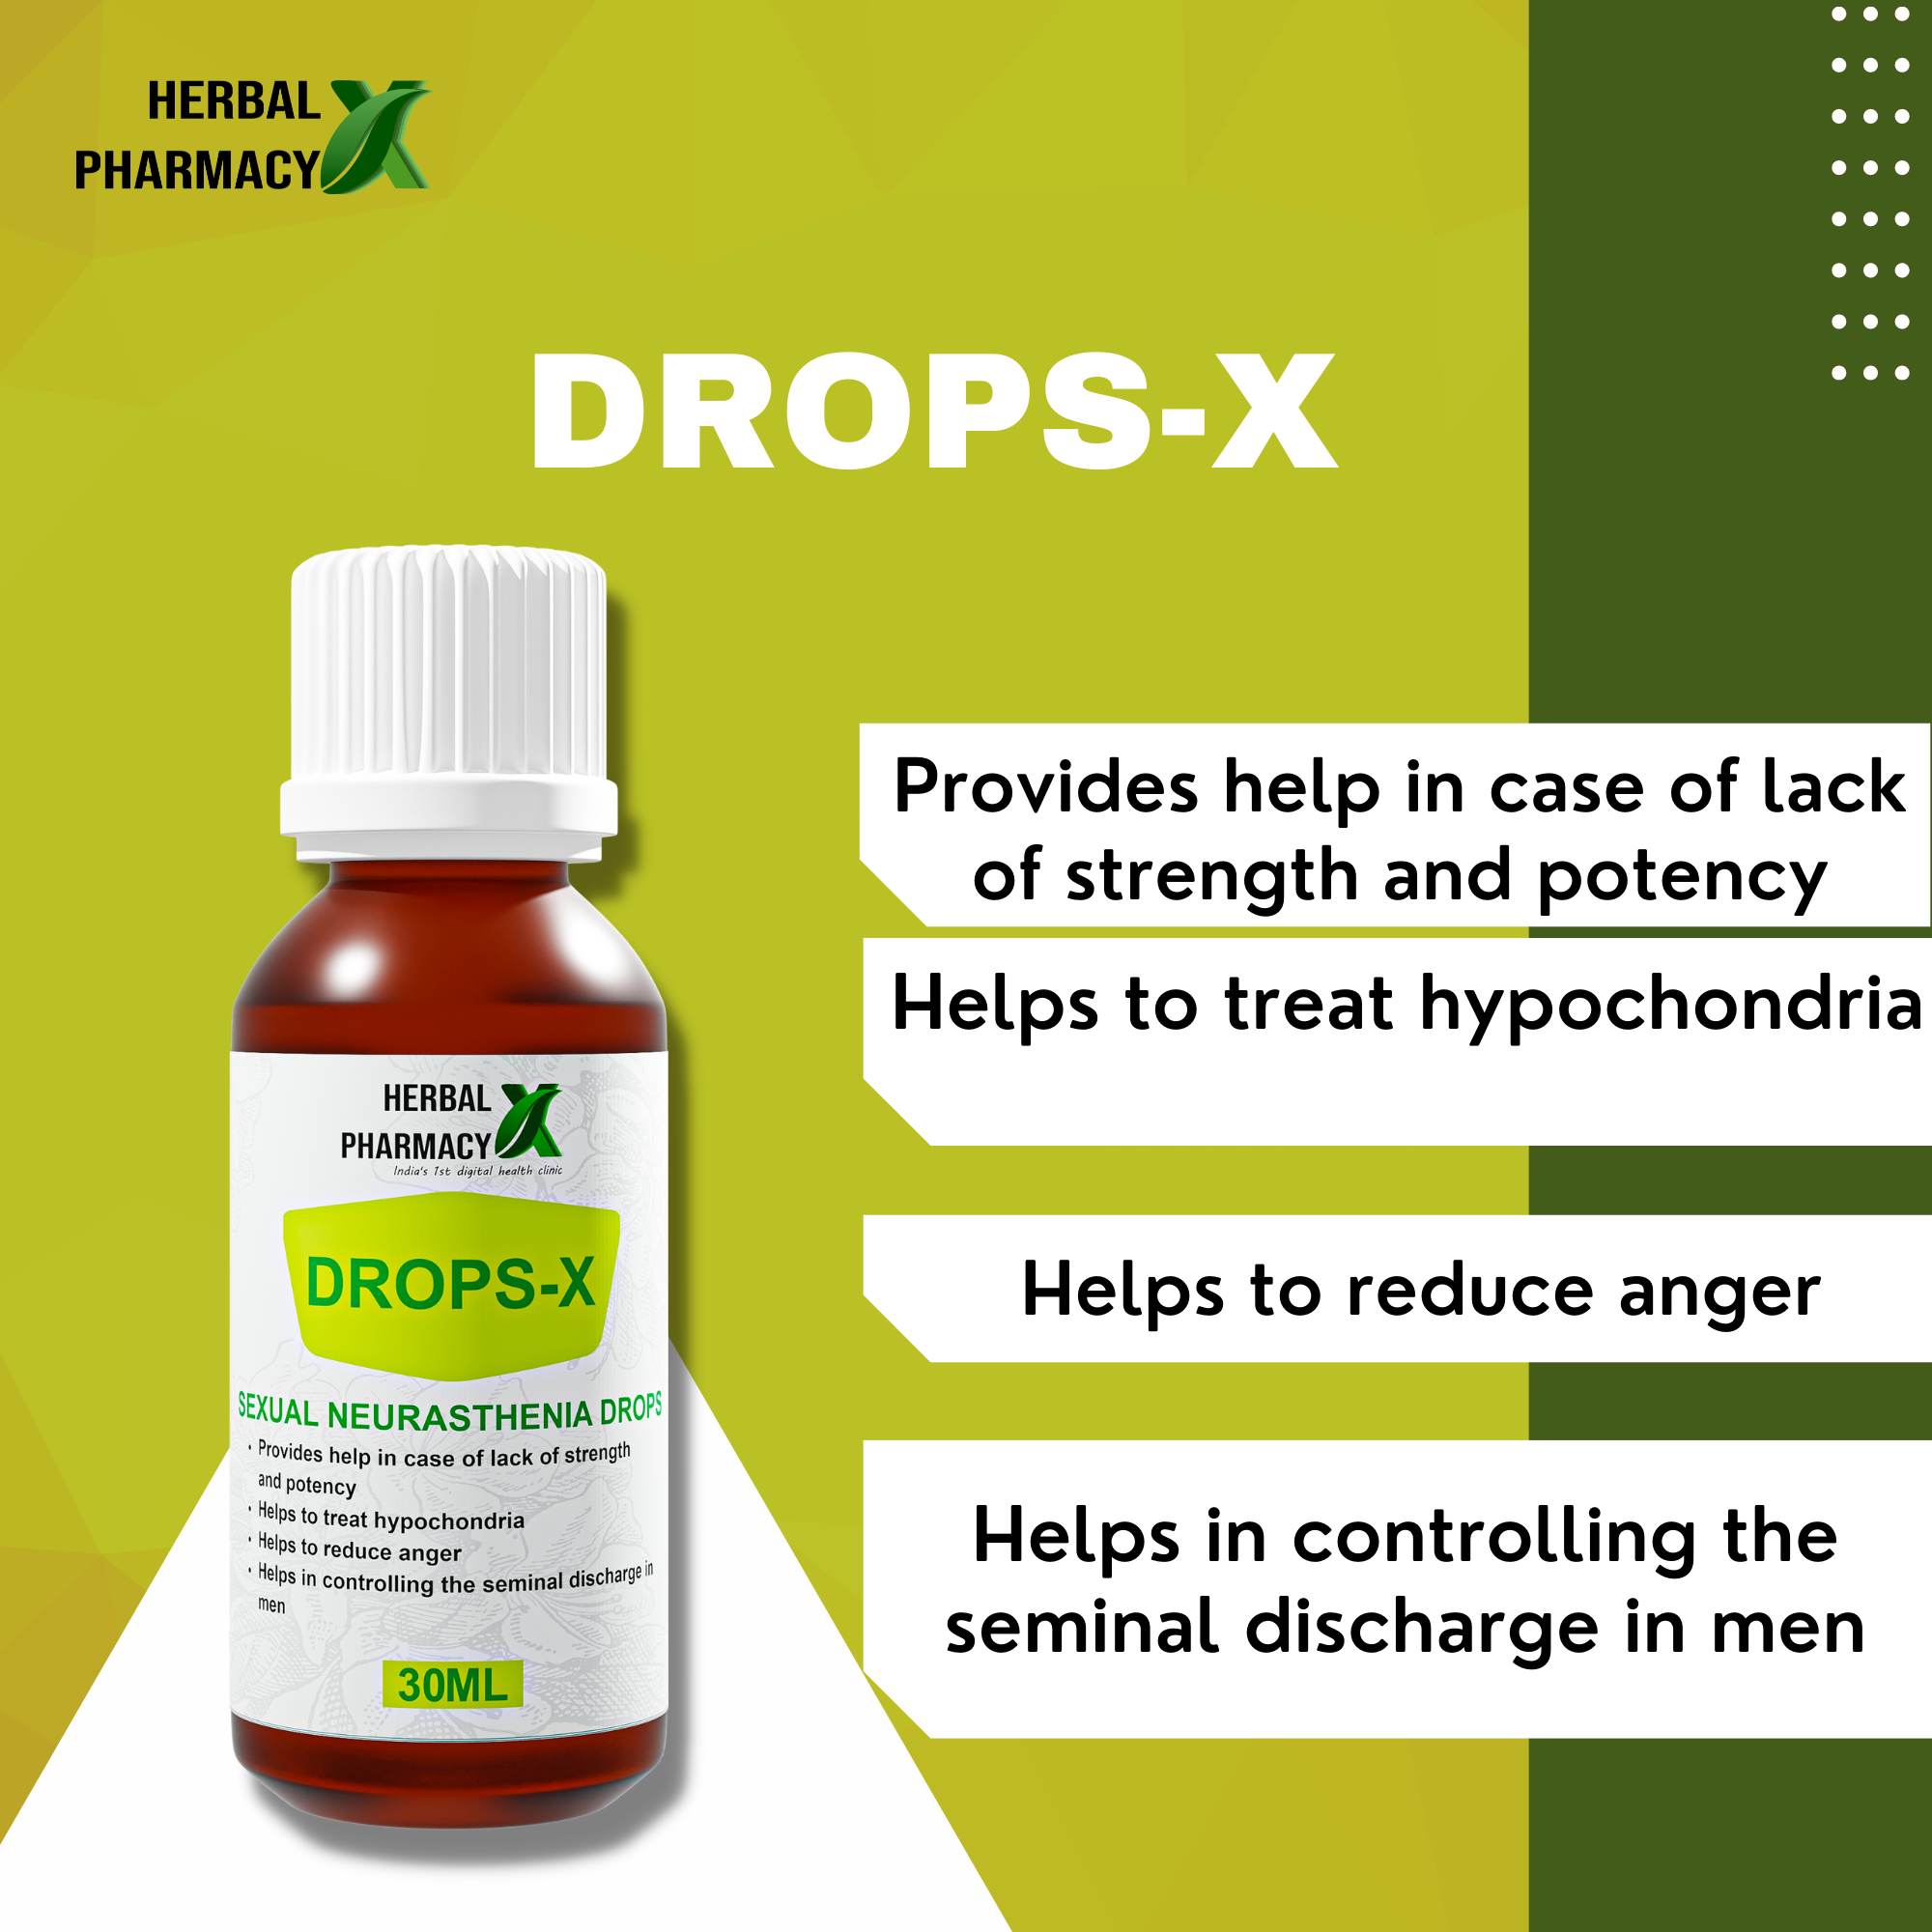 DROPS-X BY Herbal Pharmacy